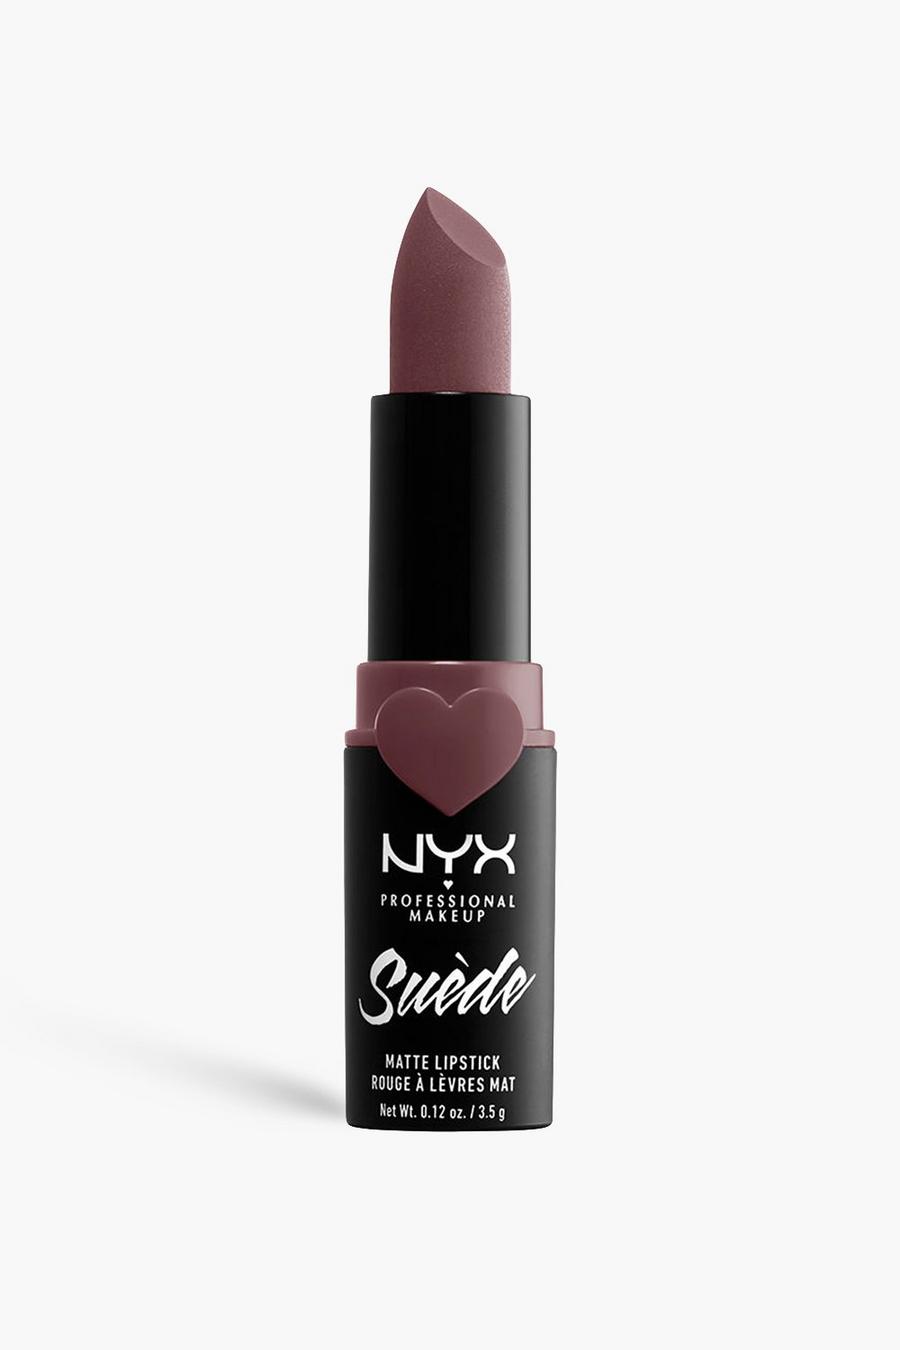 14 lavender & lace NYX Professional Makeup Suede Matte Lipstick Lightweight Matte Finish